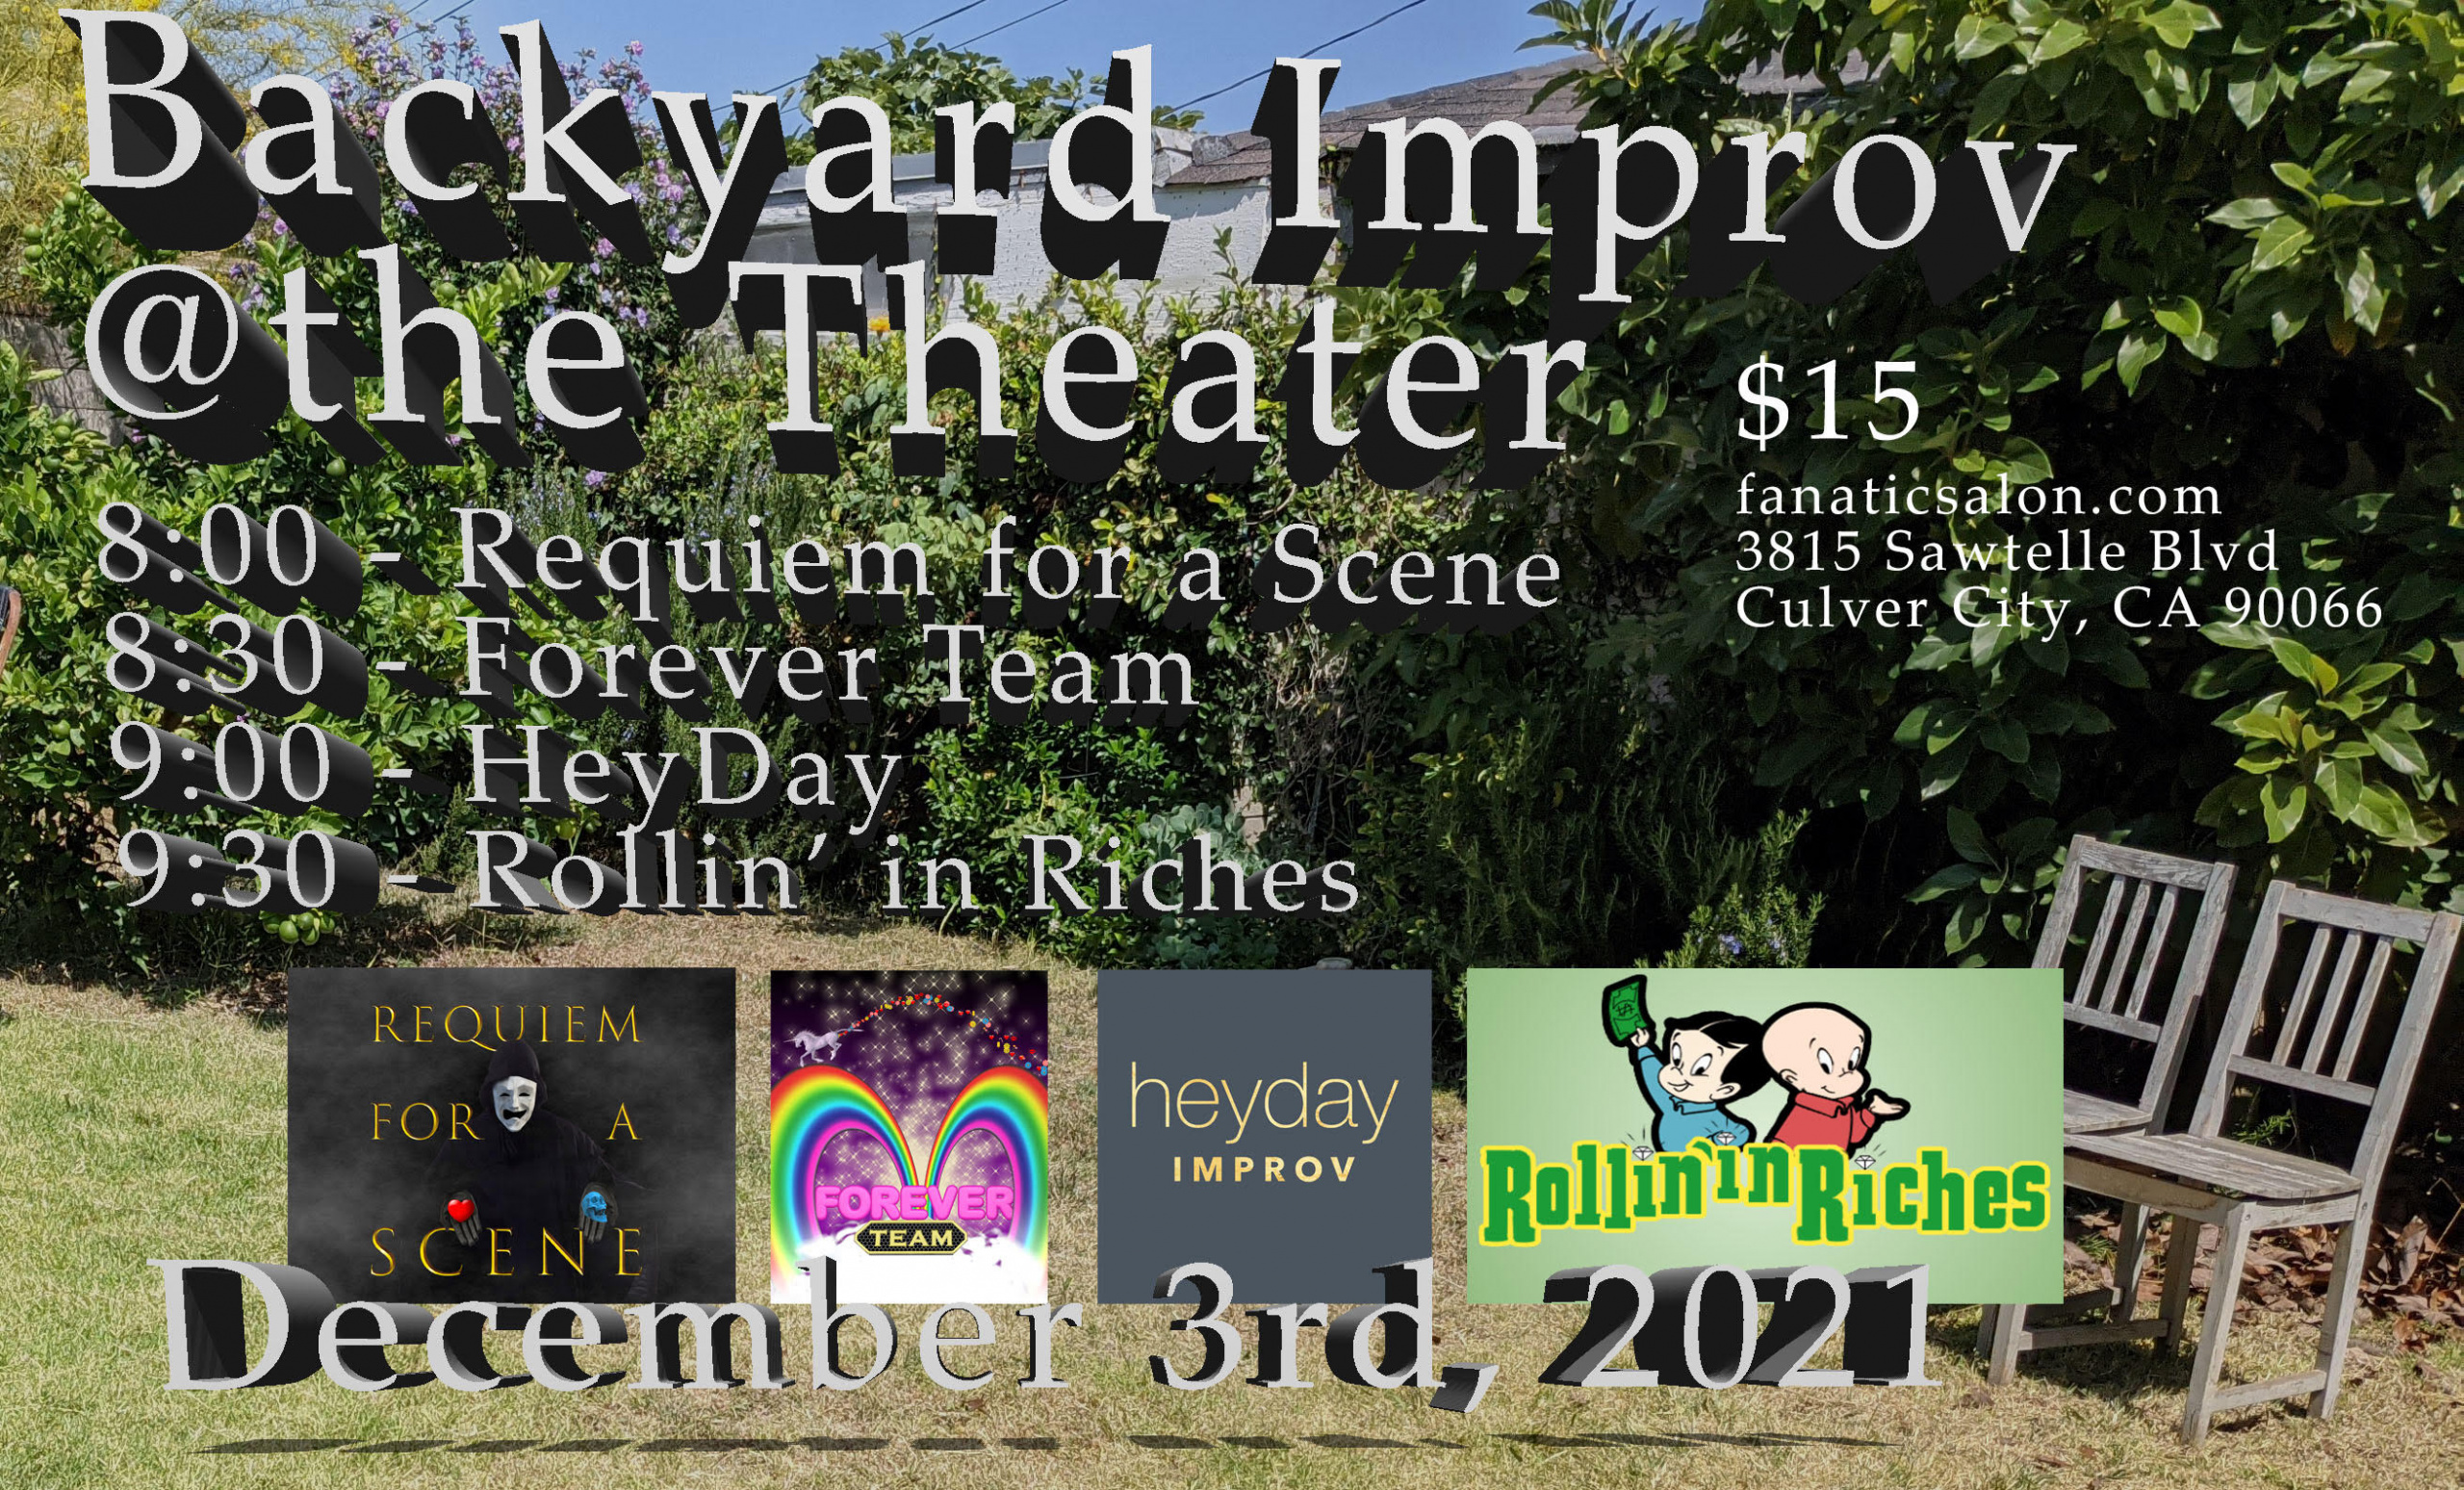 Backyard Improv at the Theater, Culver City, Fanatic Salon